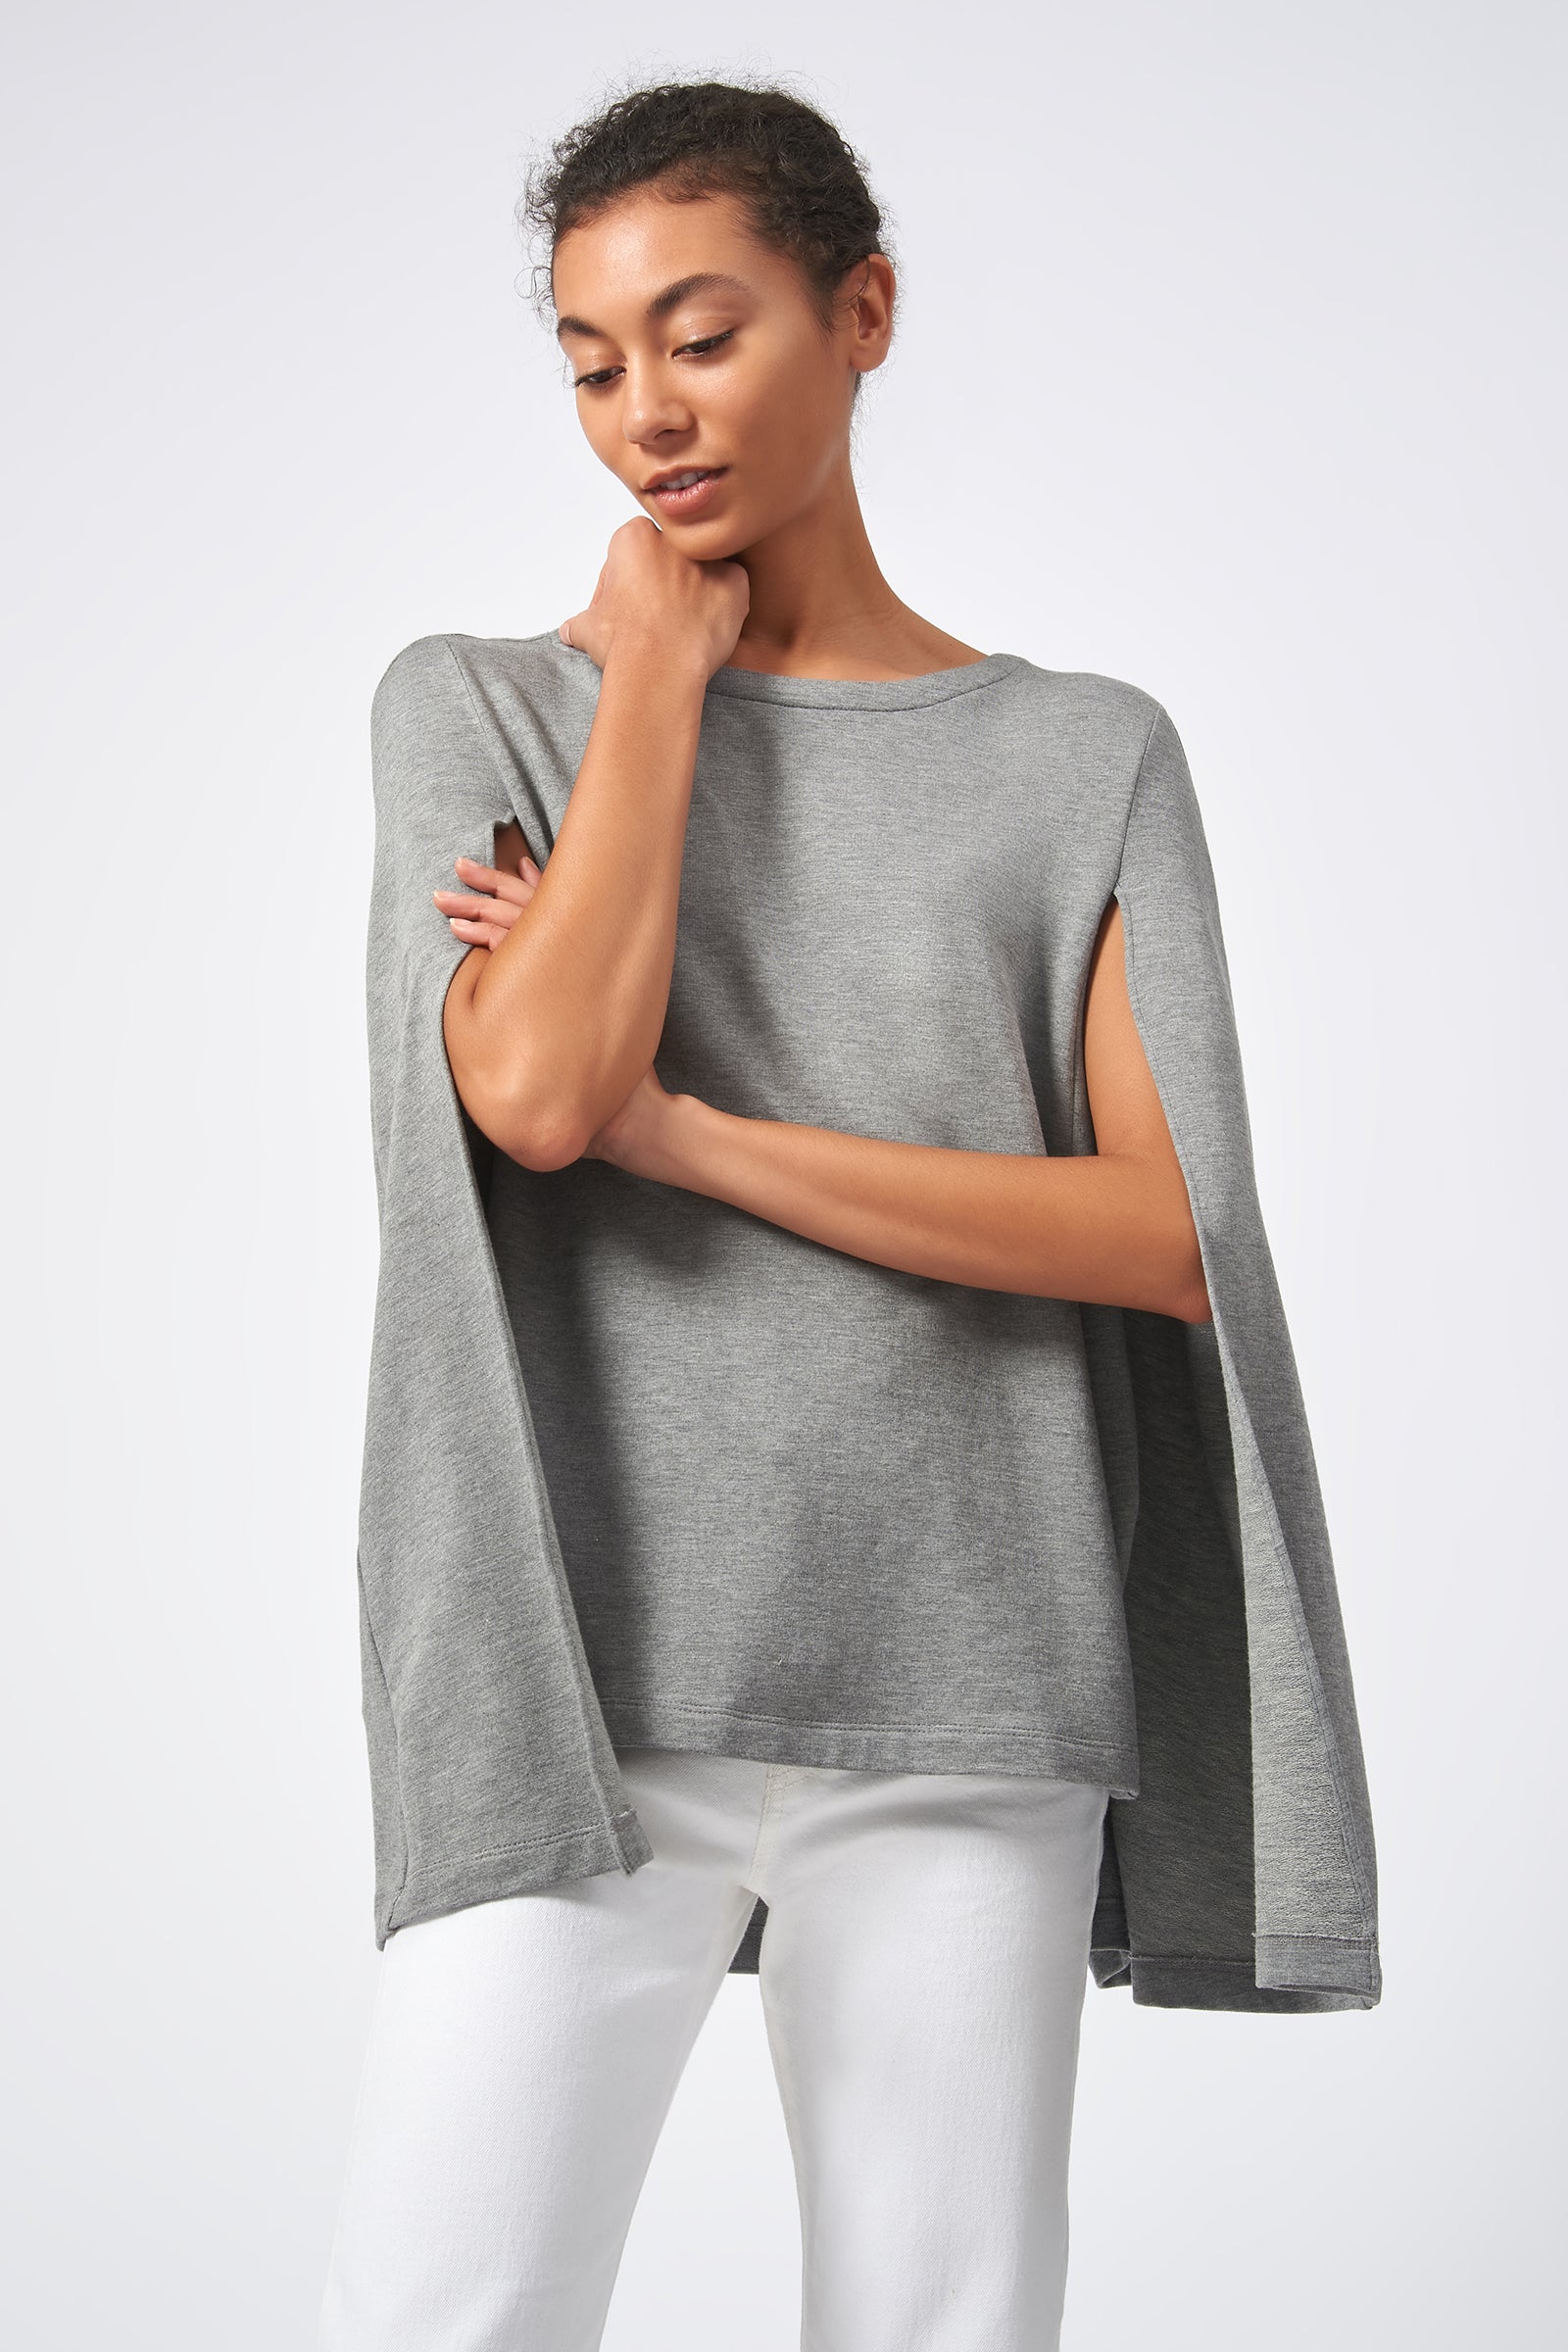 Kal Rieman Cape Sweatshirt in Heather Grey on Model Front View